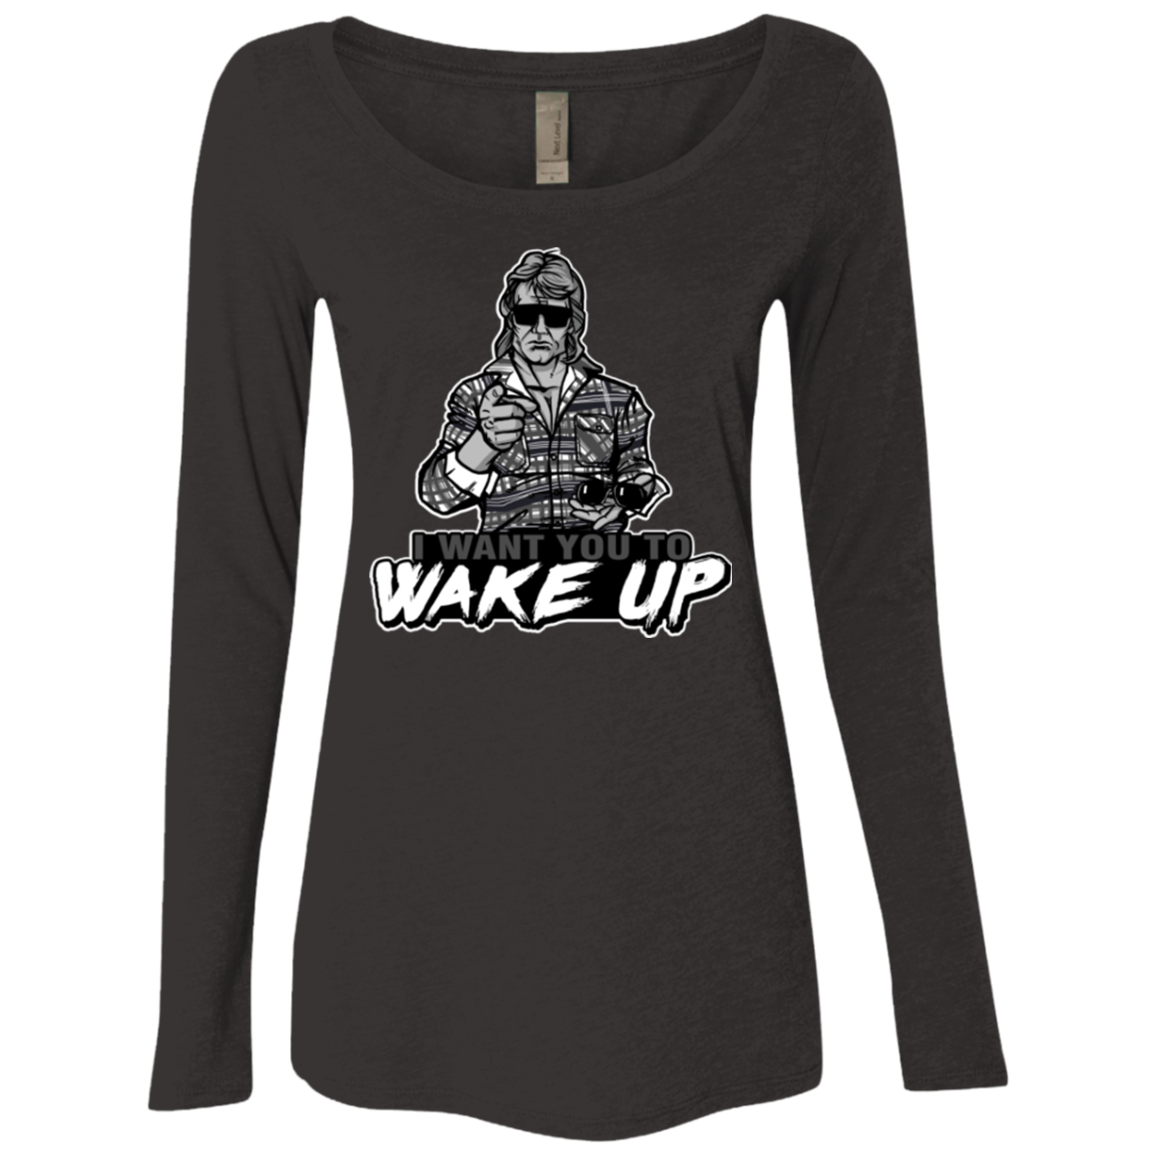 Wake Up Women's Triblend Long Sleeve Shirt